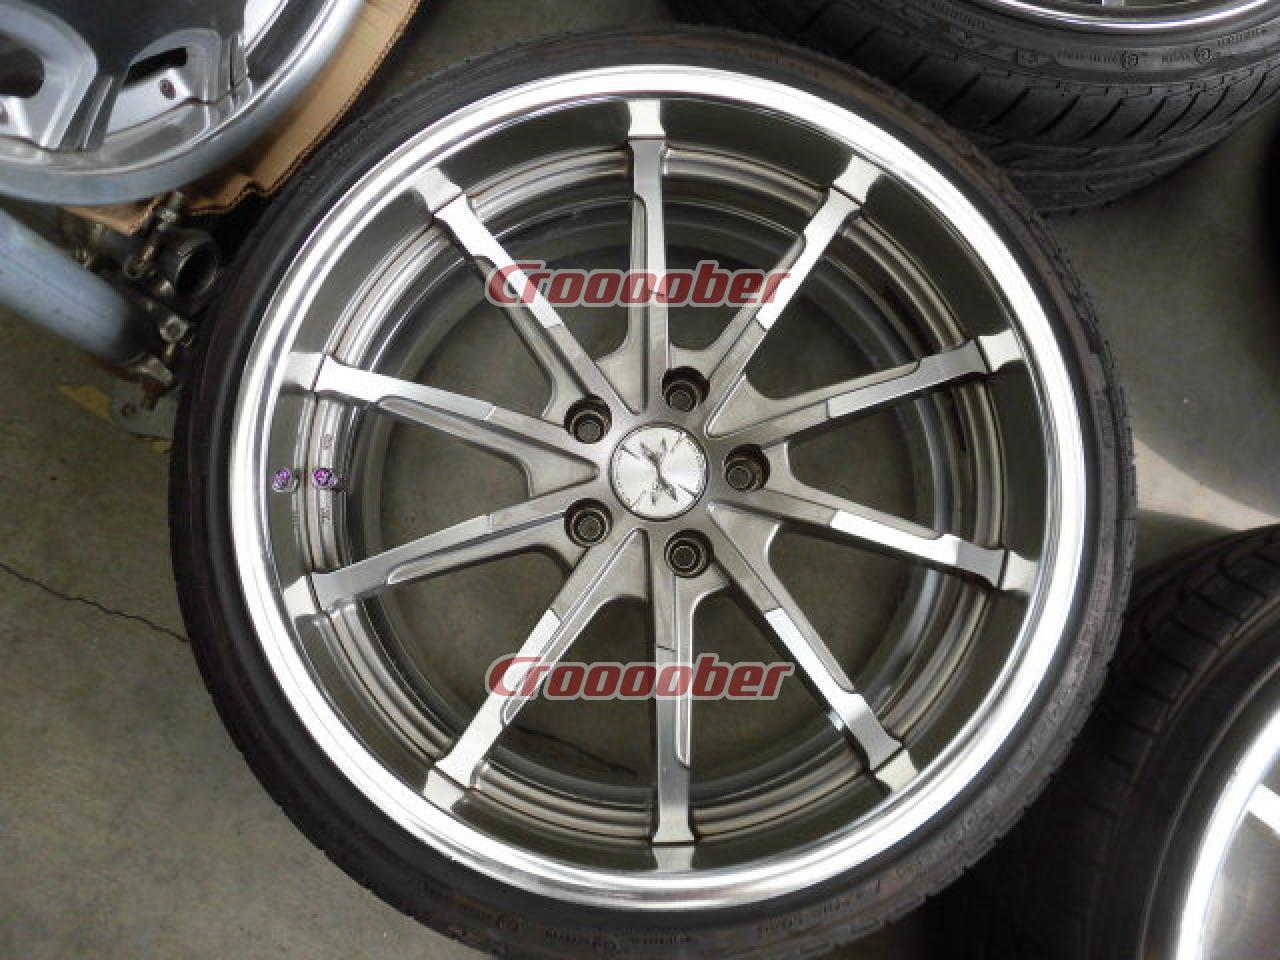 Wheel-And-Tyre-SHOP WAT 2号店Wedsハリアー W ヴェルファイア19in国産T